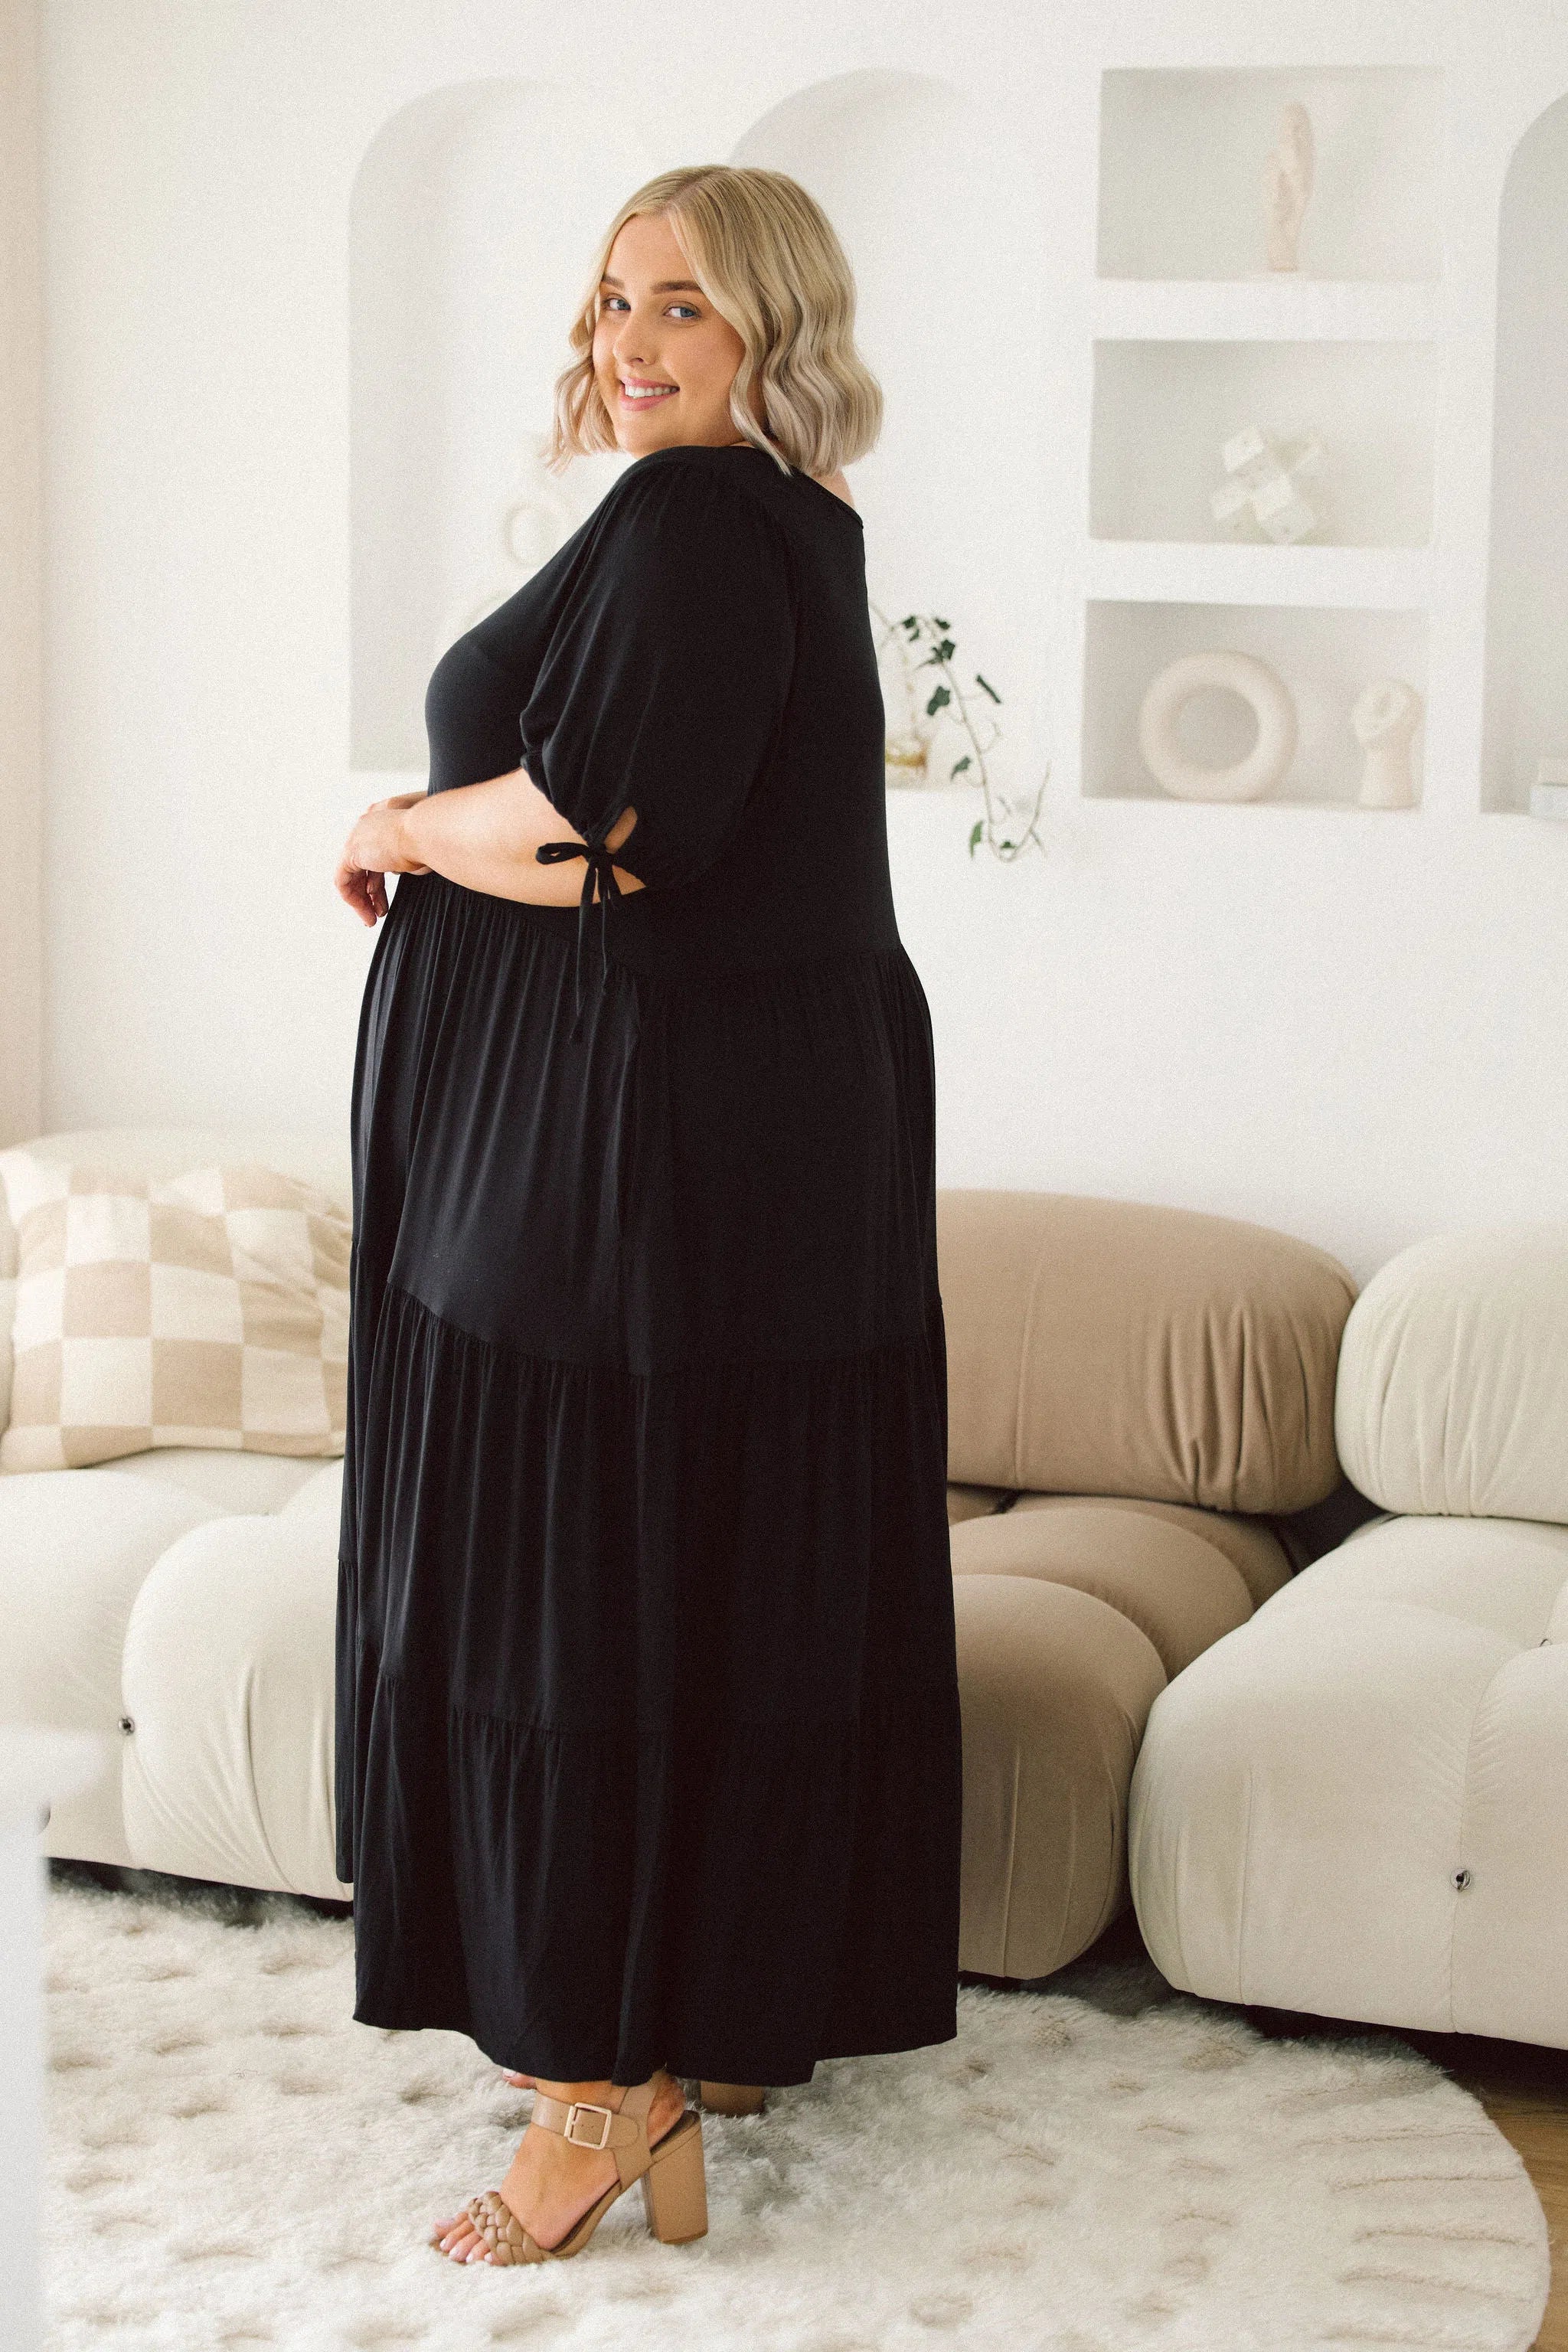 Elegant Women's Black Plus Size Dress - Harlow Dress from Peach The Label